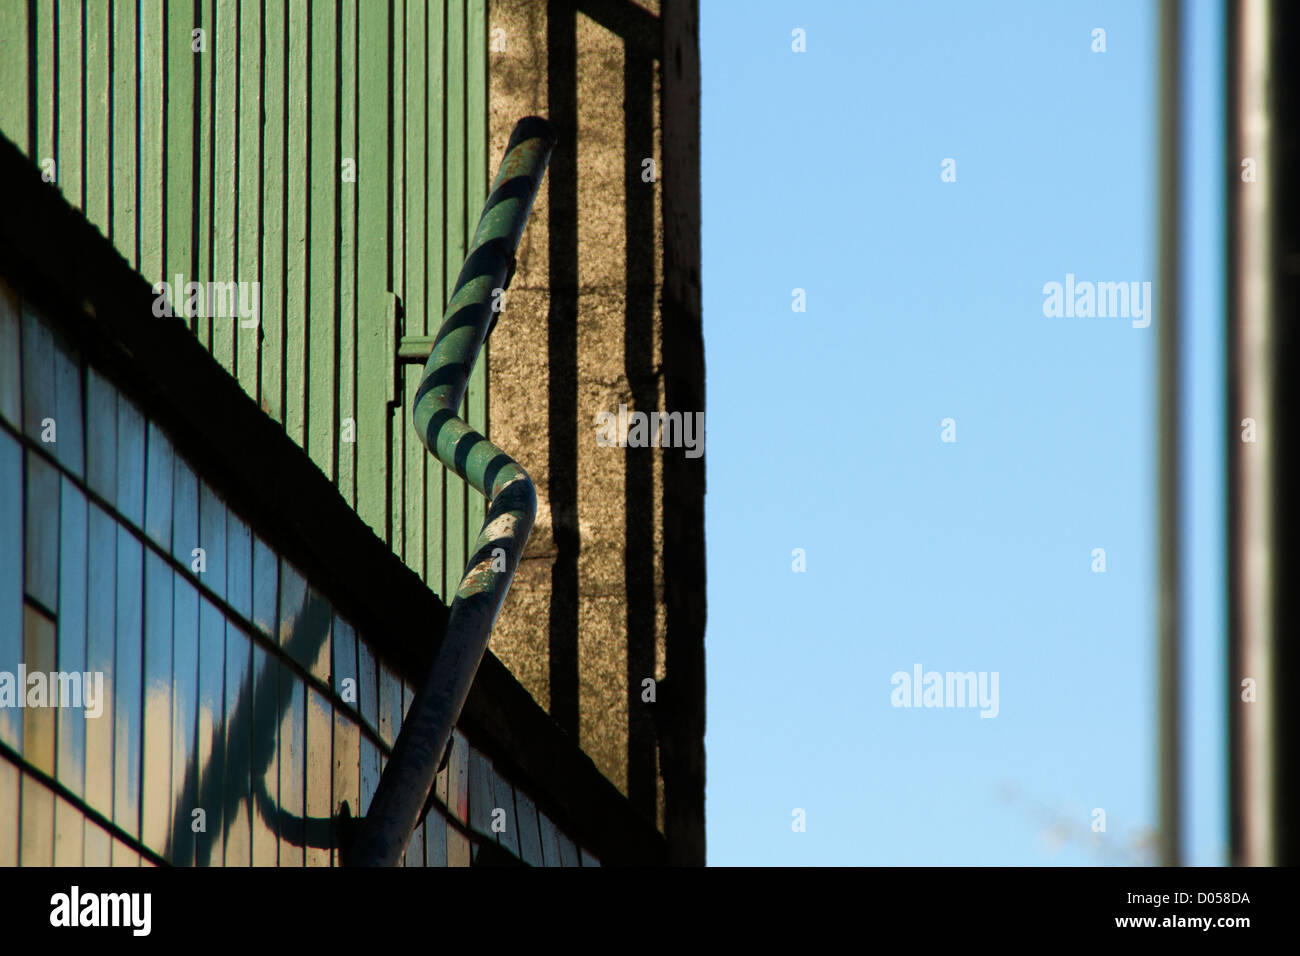 subway railings, clear blue sky, Stock Photo